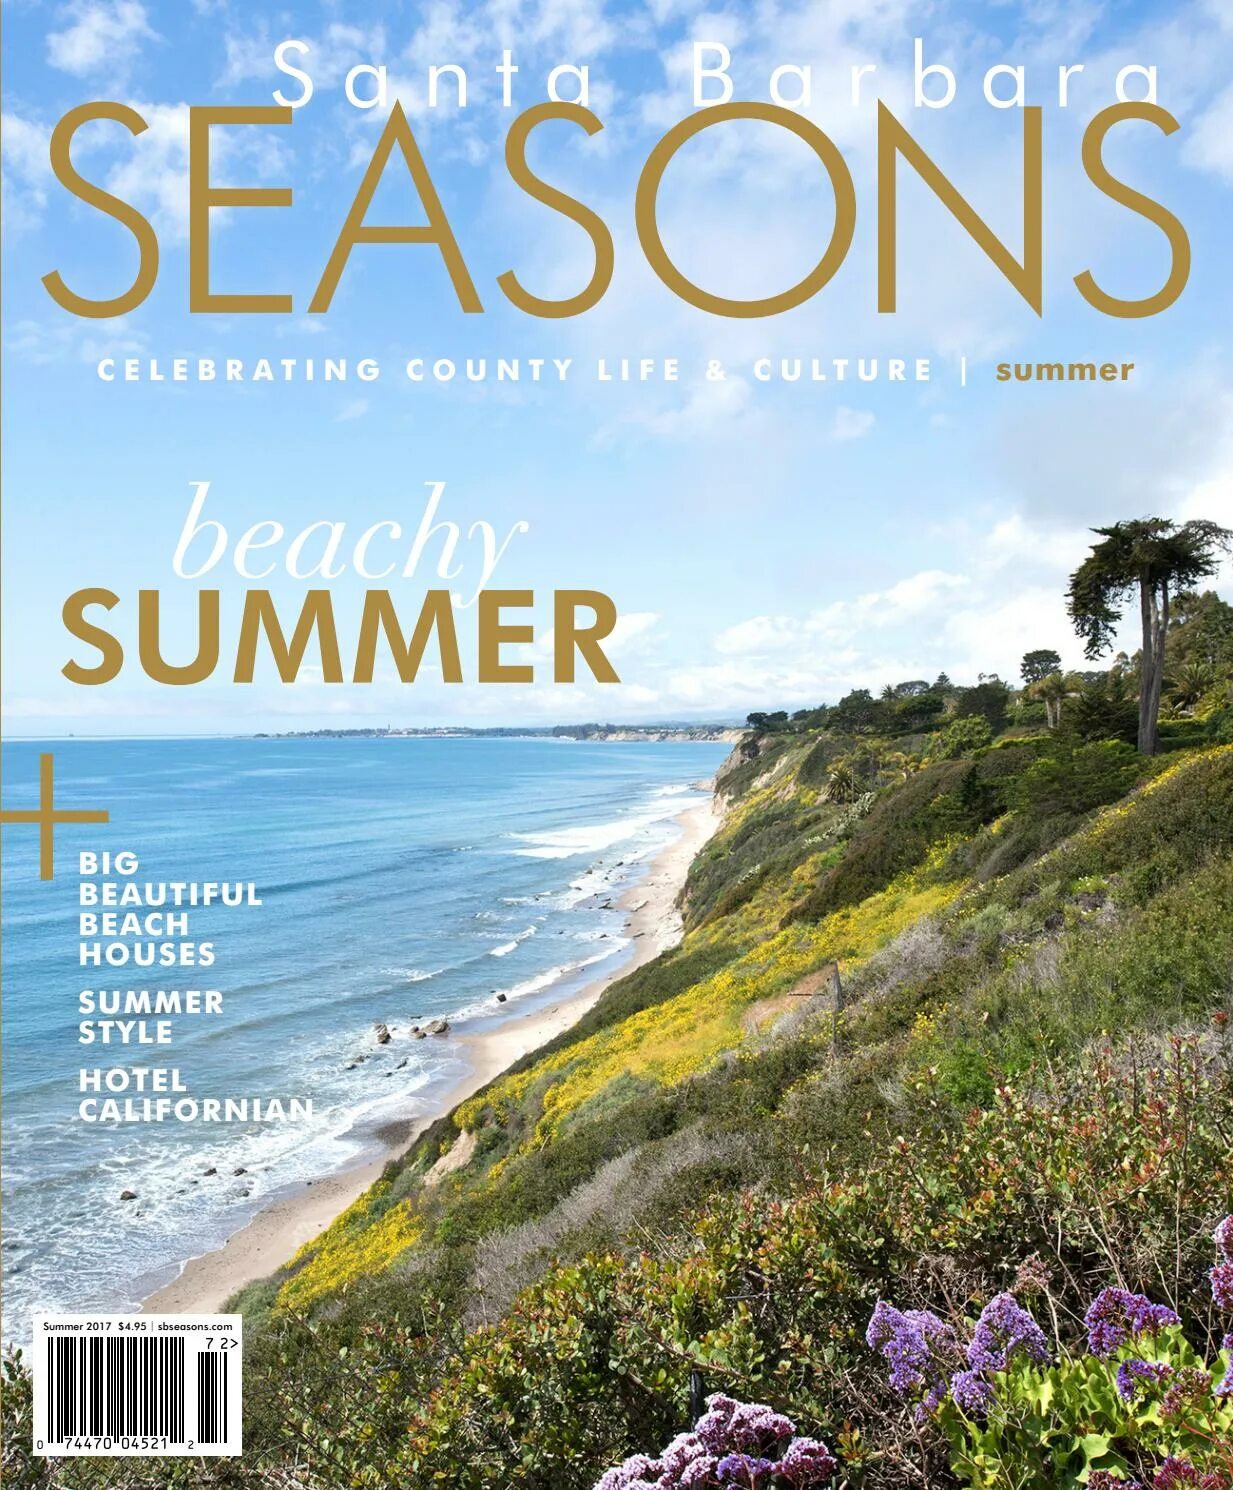 Seasons журнал. Журнал Сизонс обложки. Seasons Magazine. Журнал Сизонс.